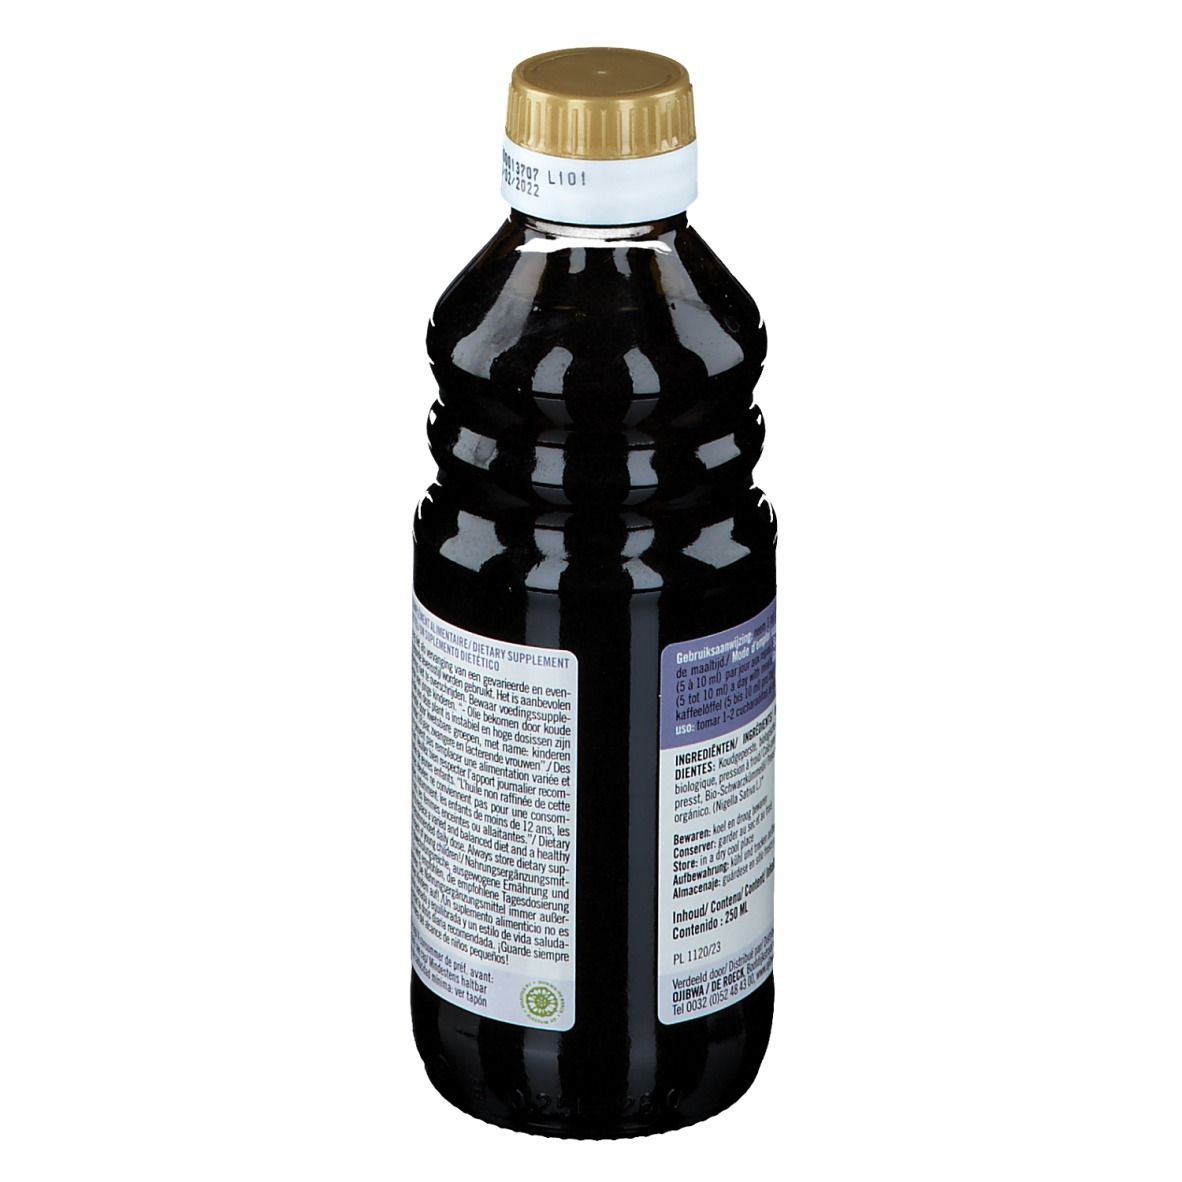 Nigella Oil Superior